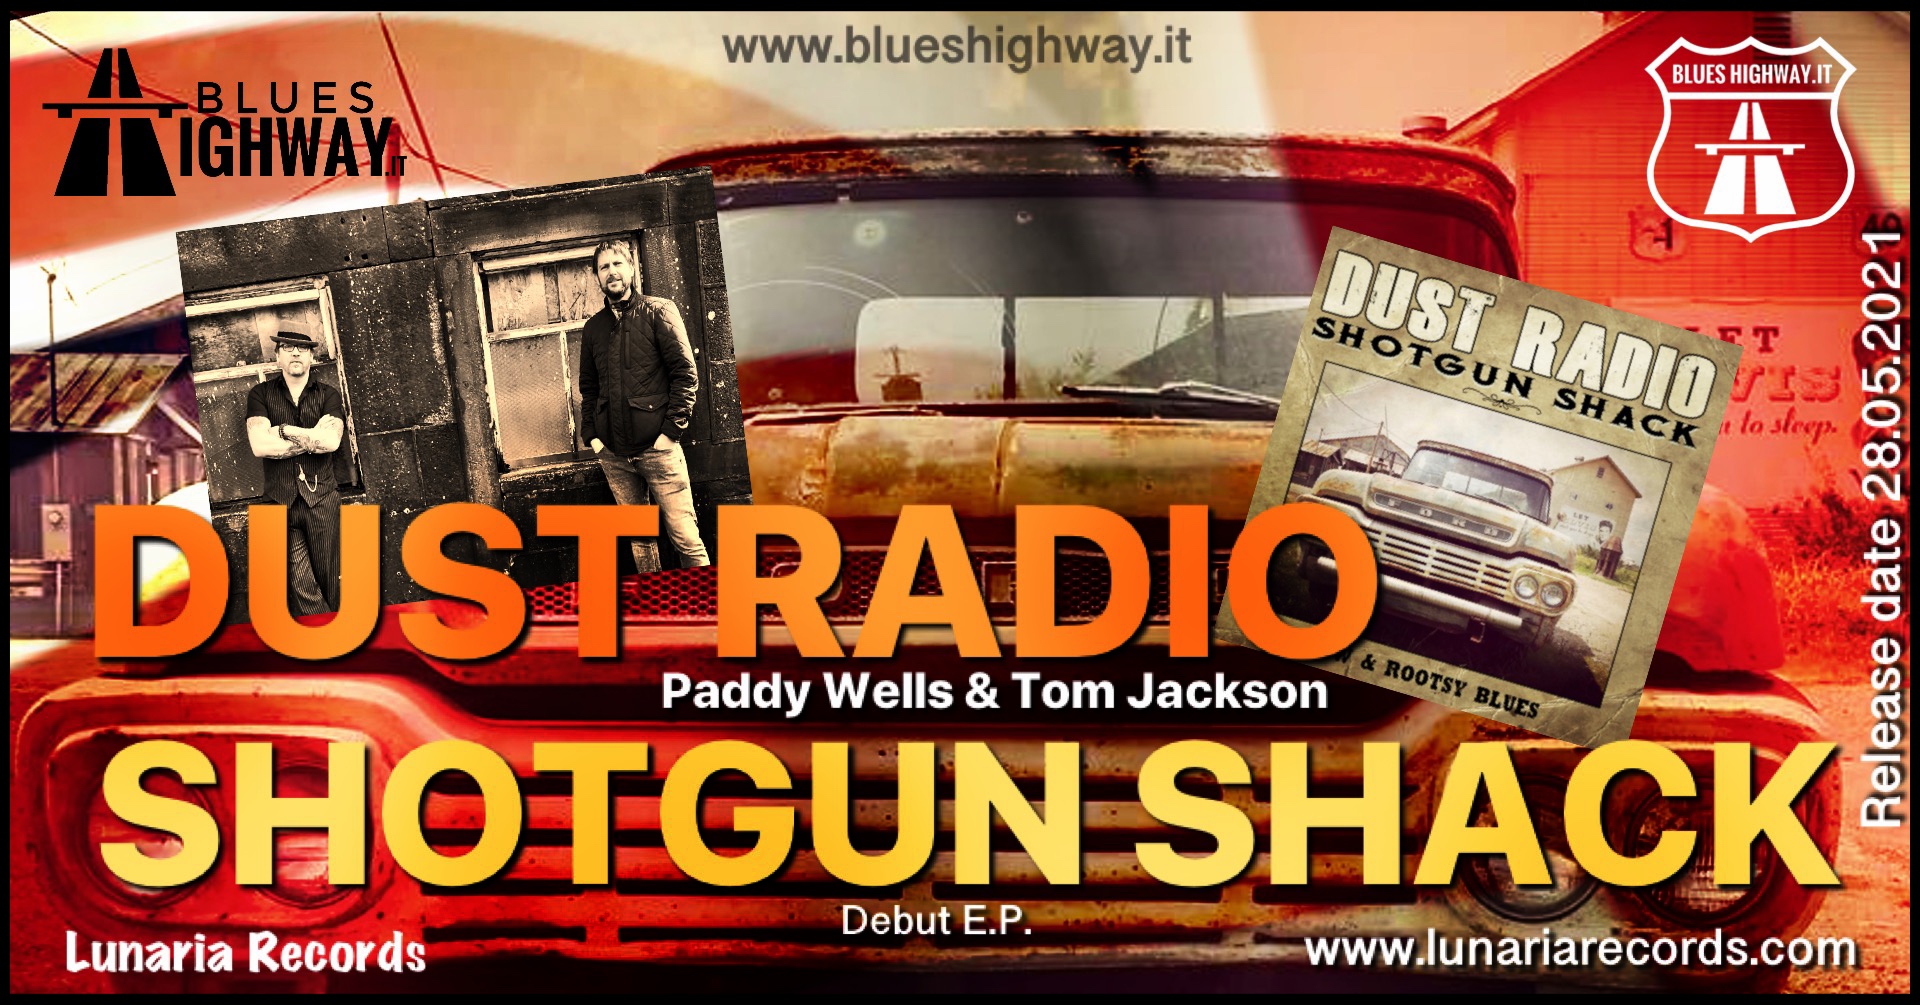 Dust Radio - Debut E.P. “Shotgun Shack”